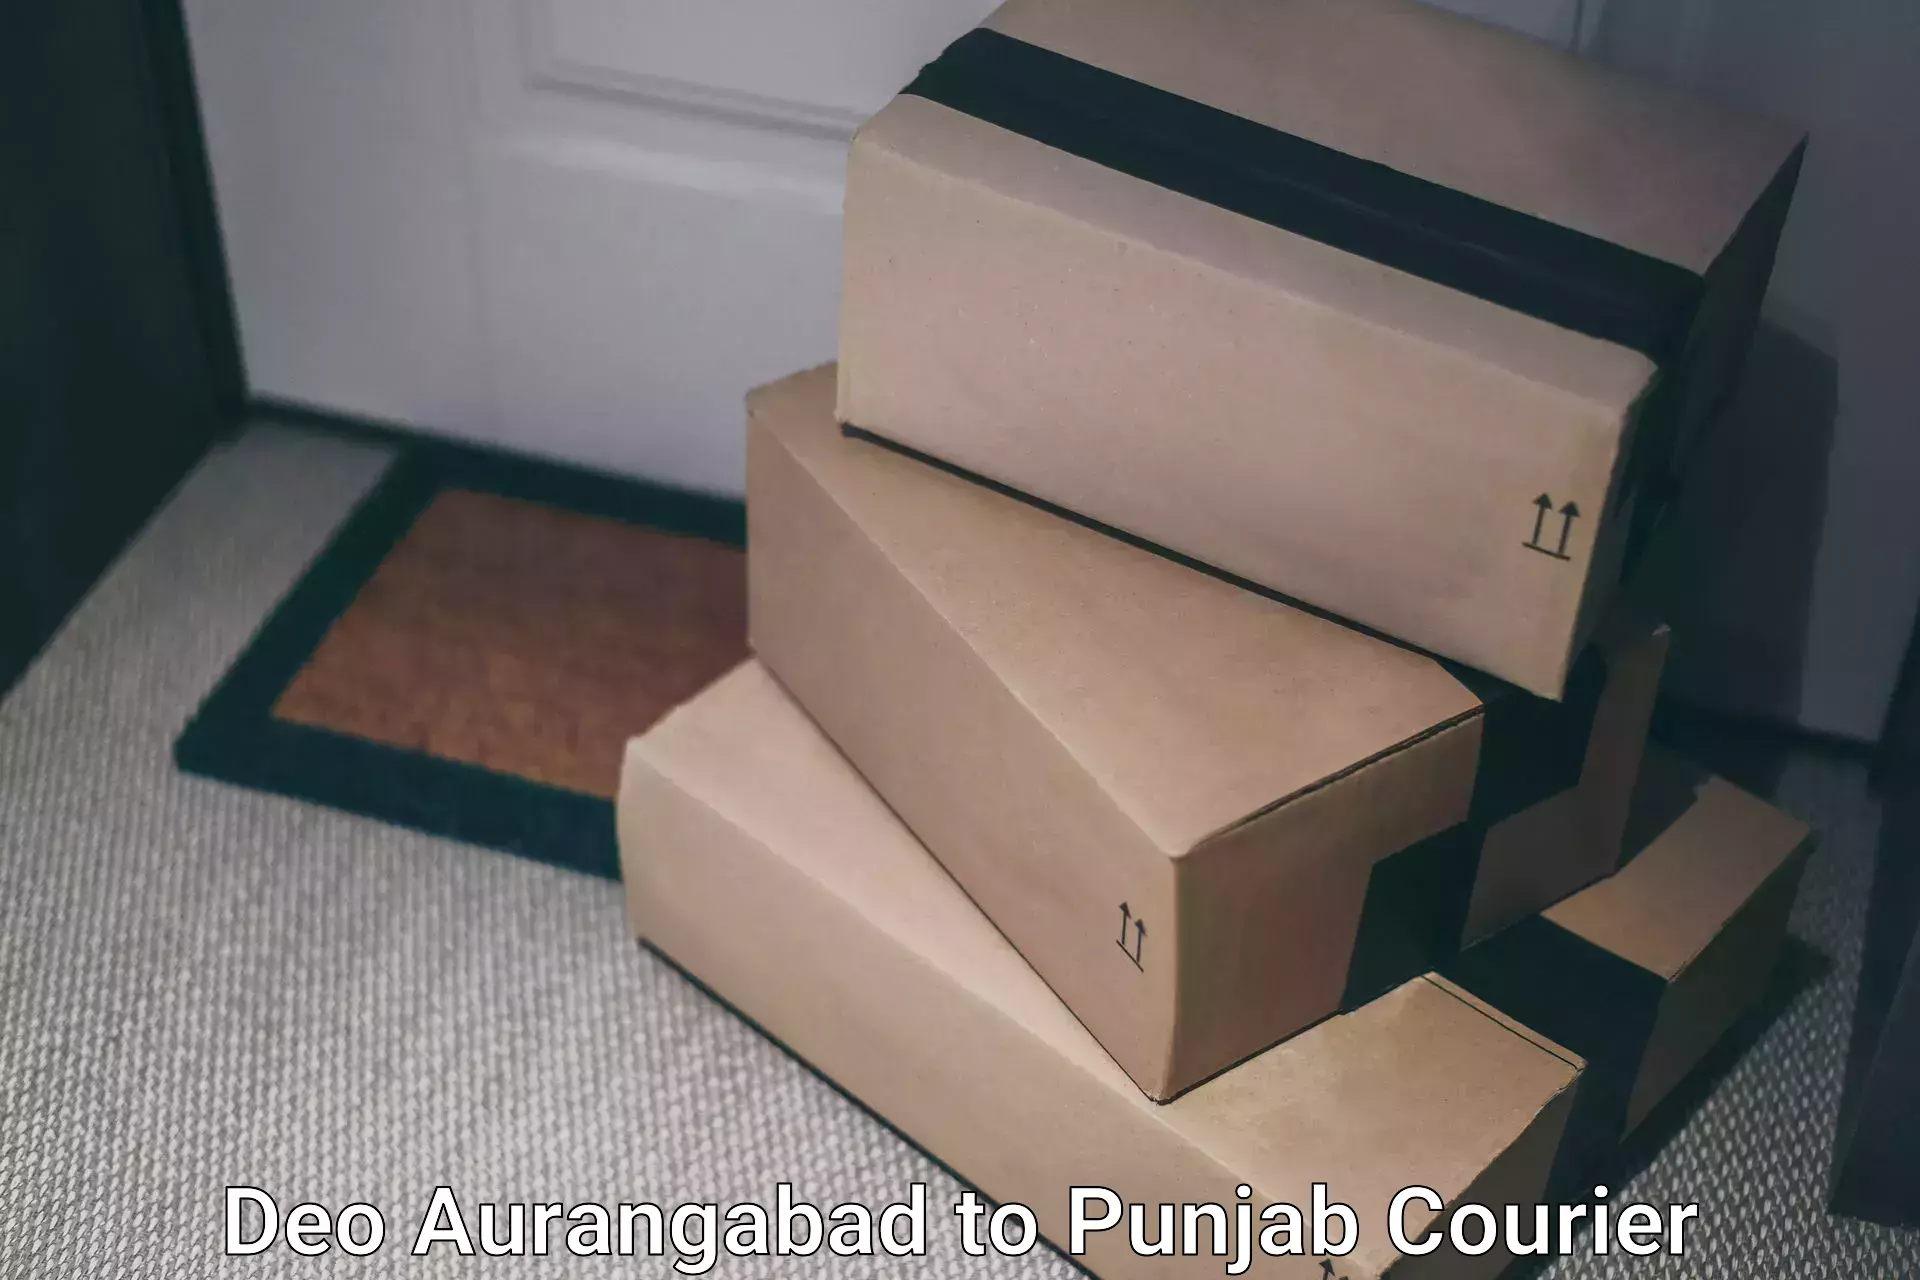 High-capacity parcel service Deo Aurangabad to Amritsar